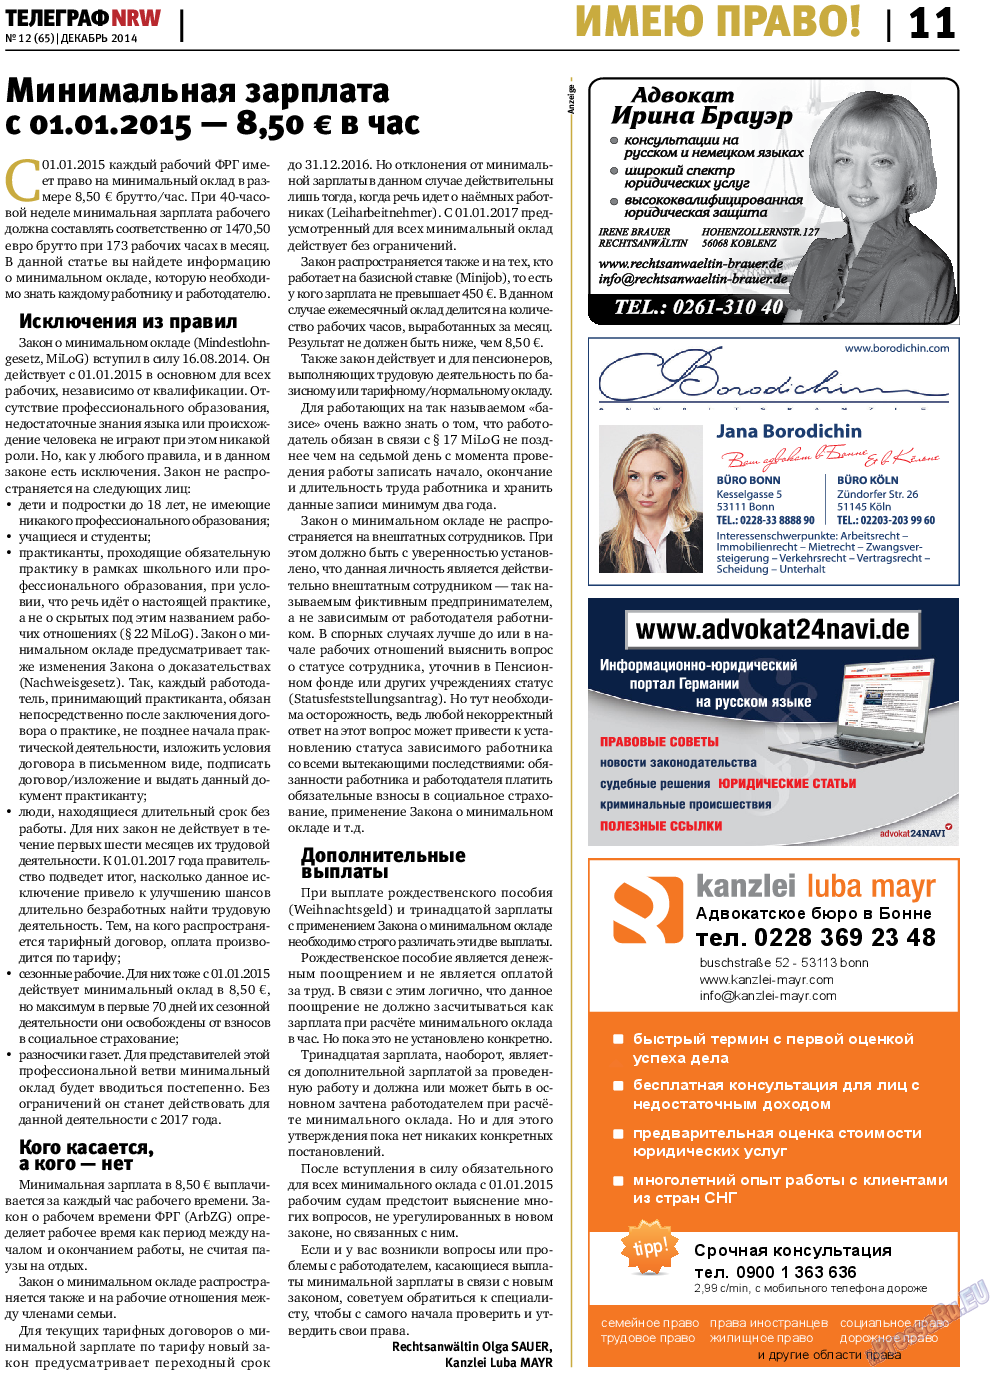 Телеграф NRW, газета. 2014 №12 стр.11